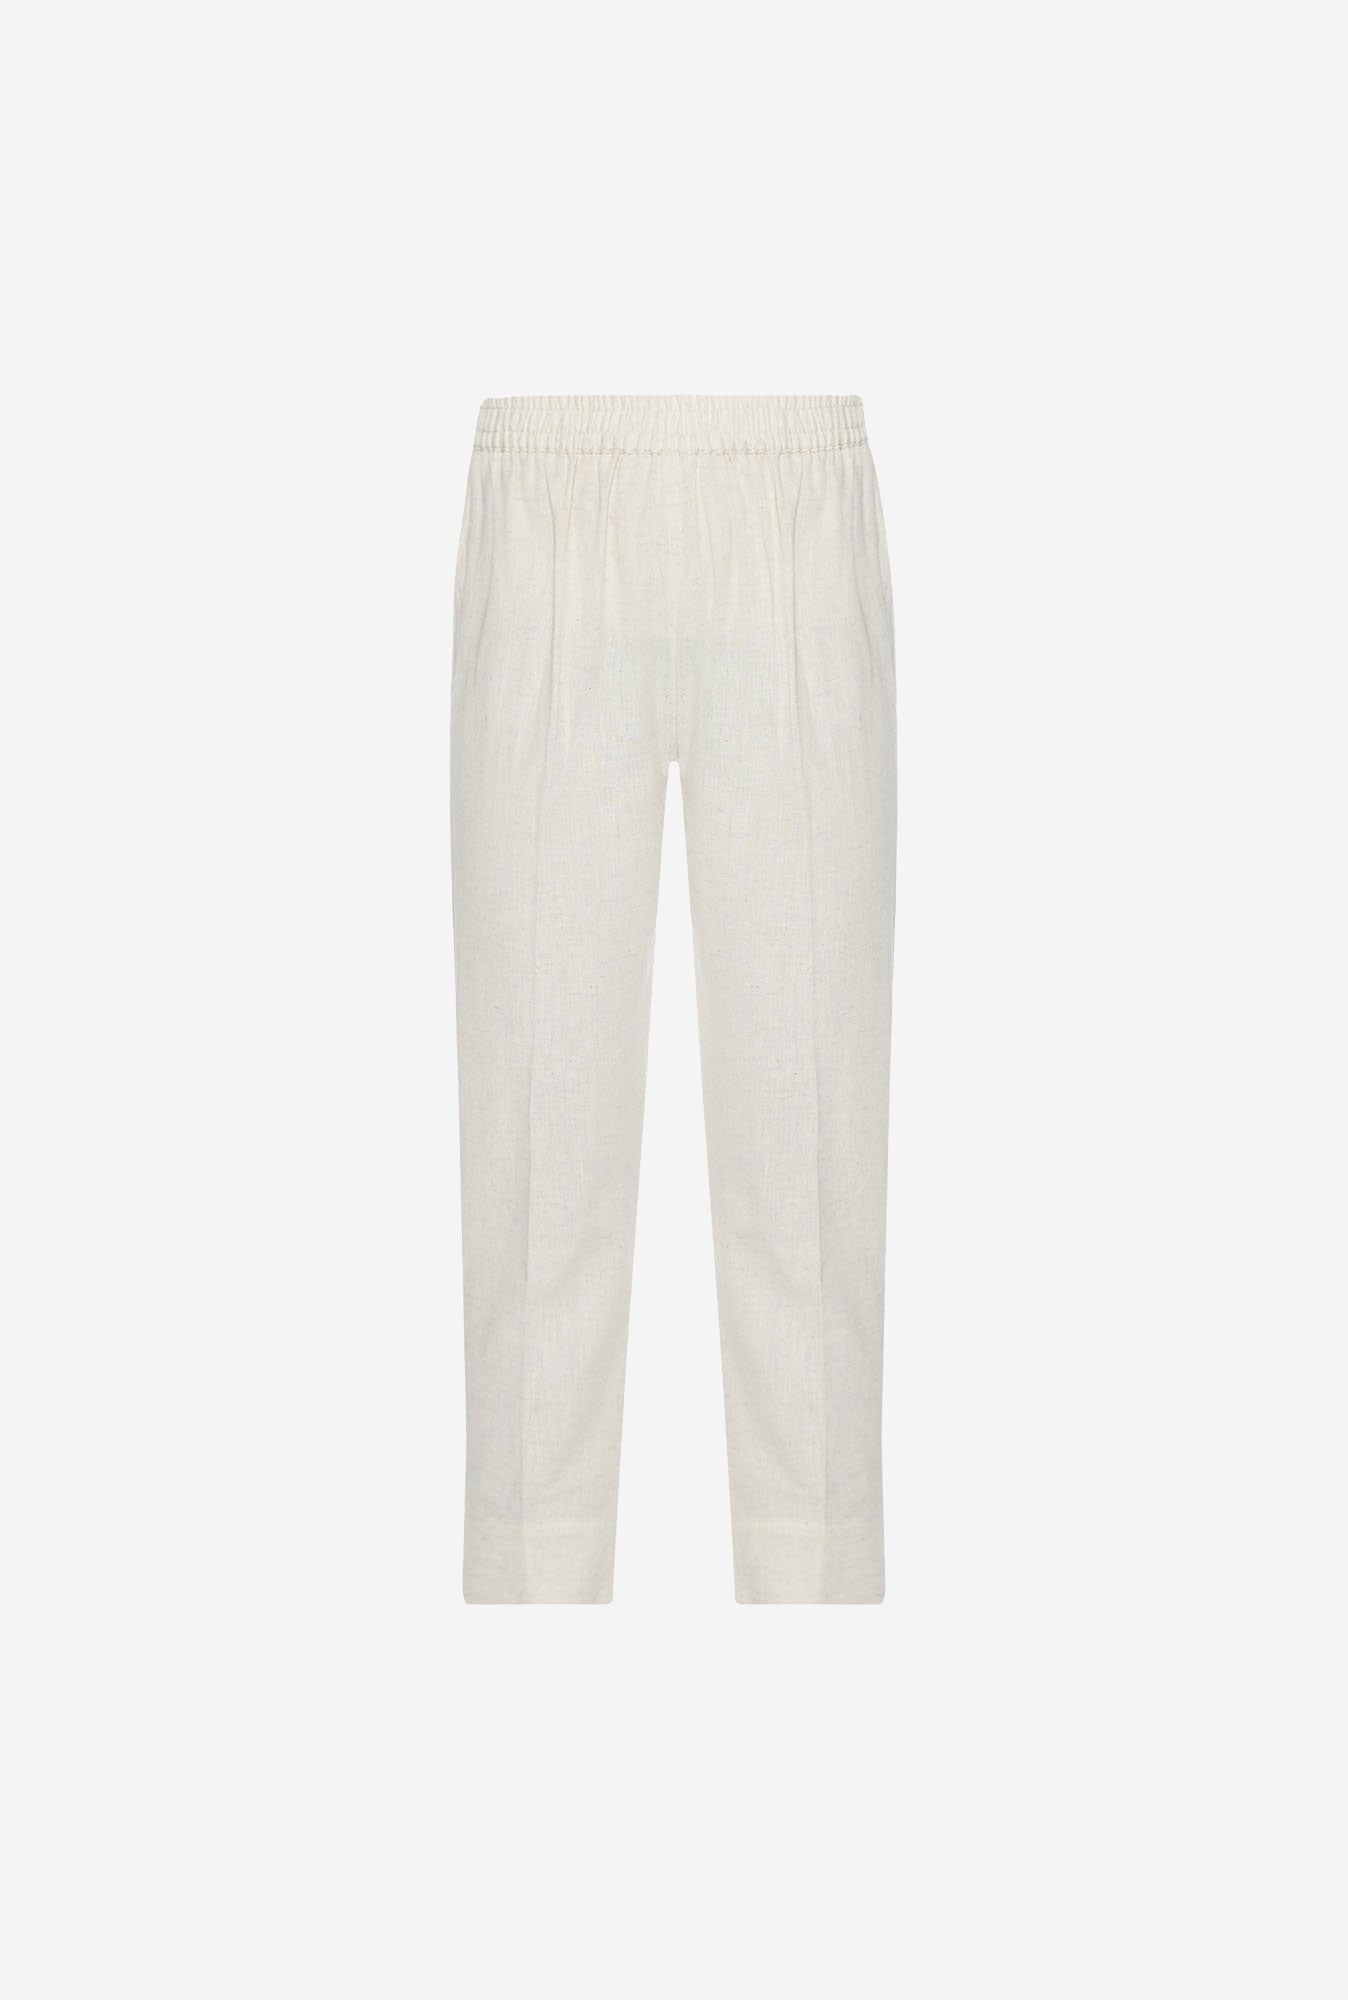 Mens Cotton Linen Capri Pants Summer Loose Ethnic Trousers Pocket Baggy  Casual | eBay